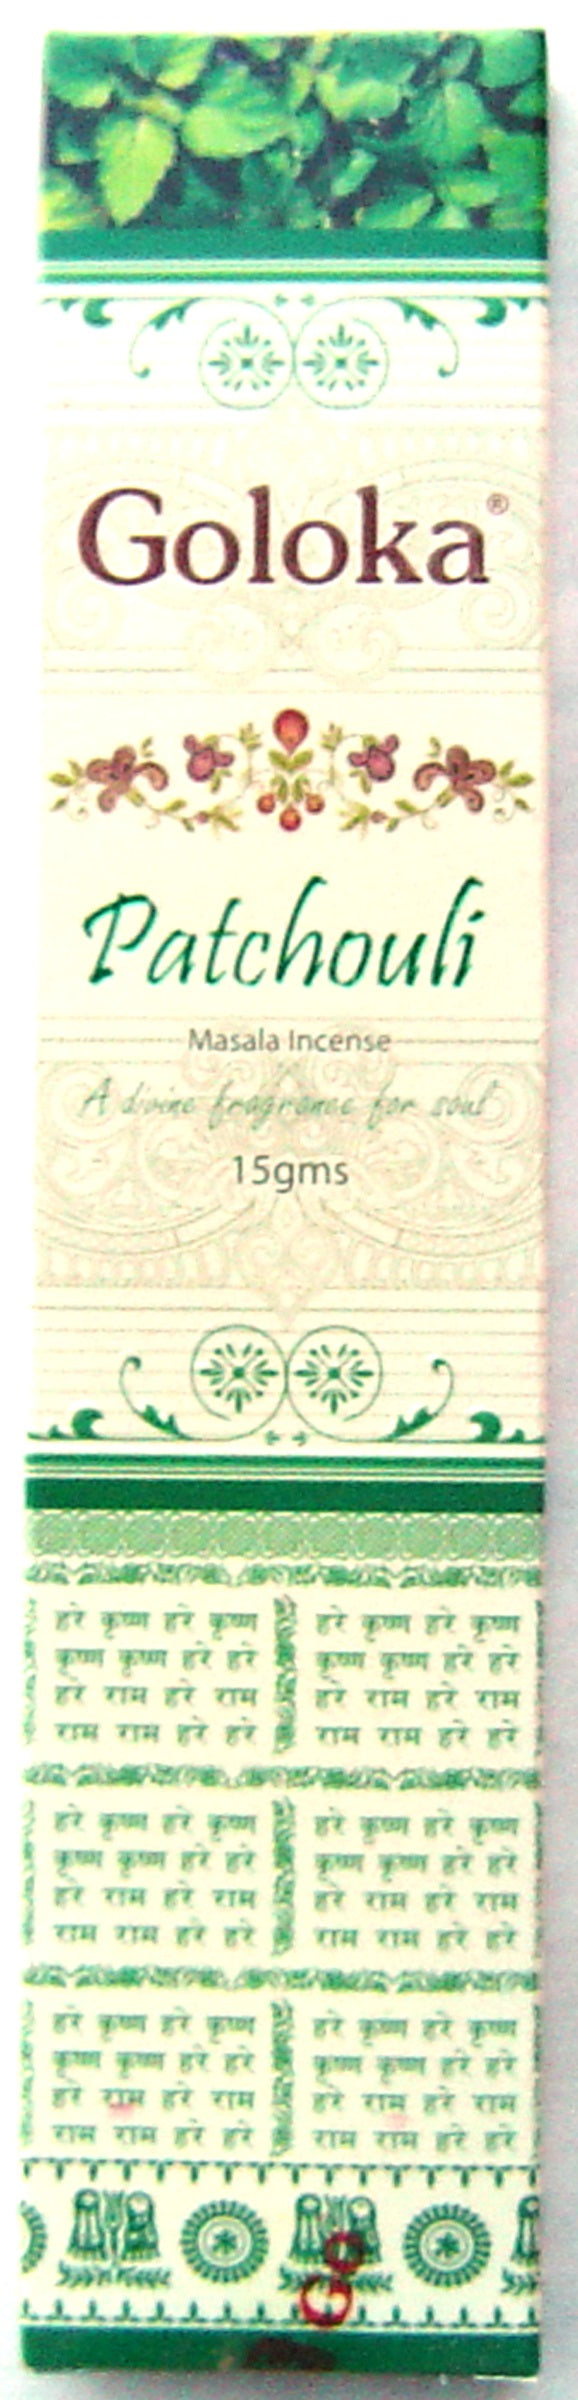 Goloka Masala - Patchouli